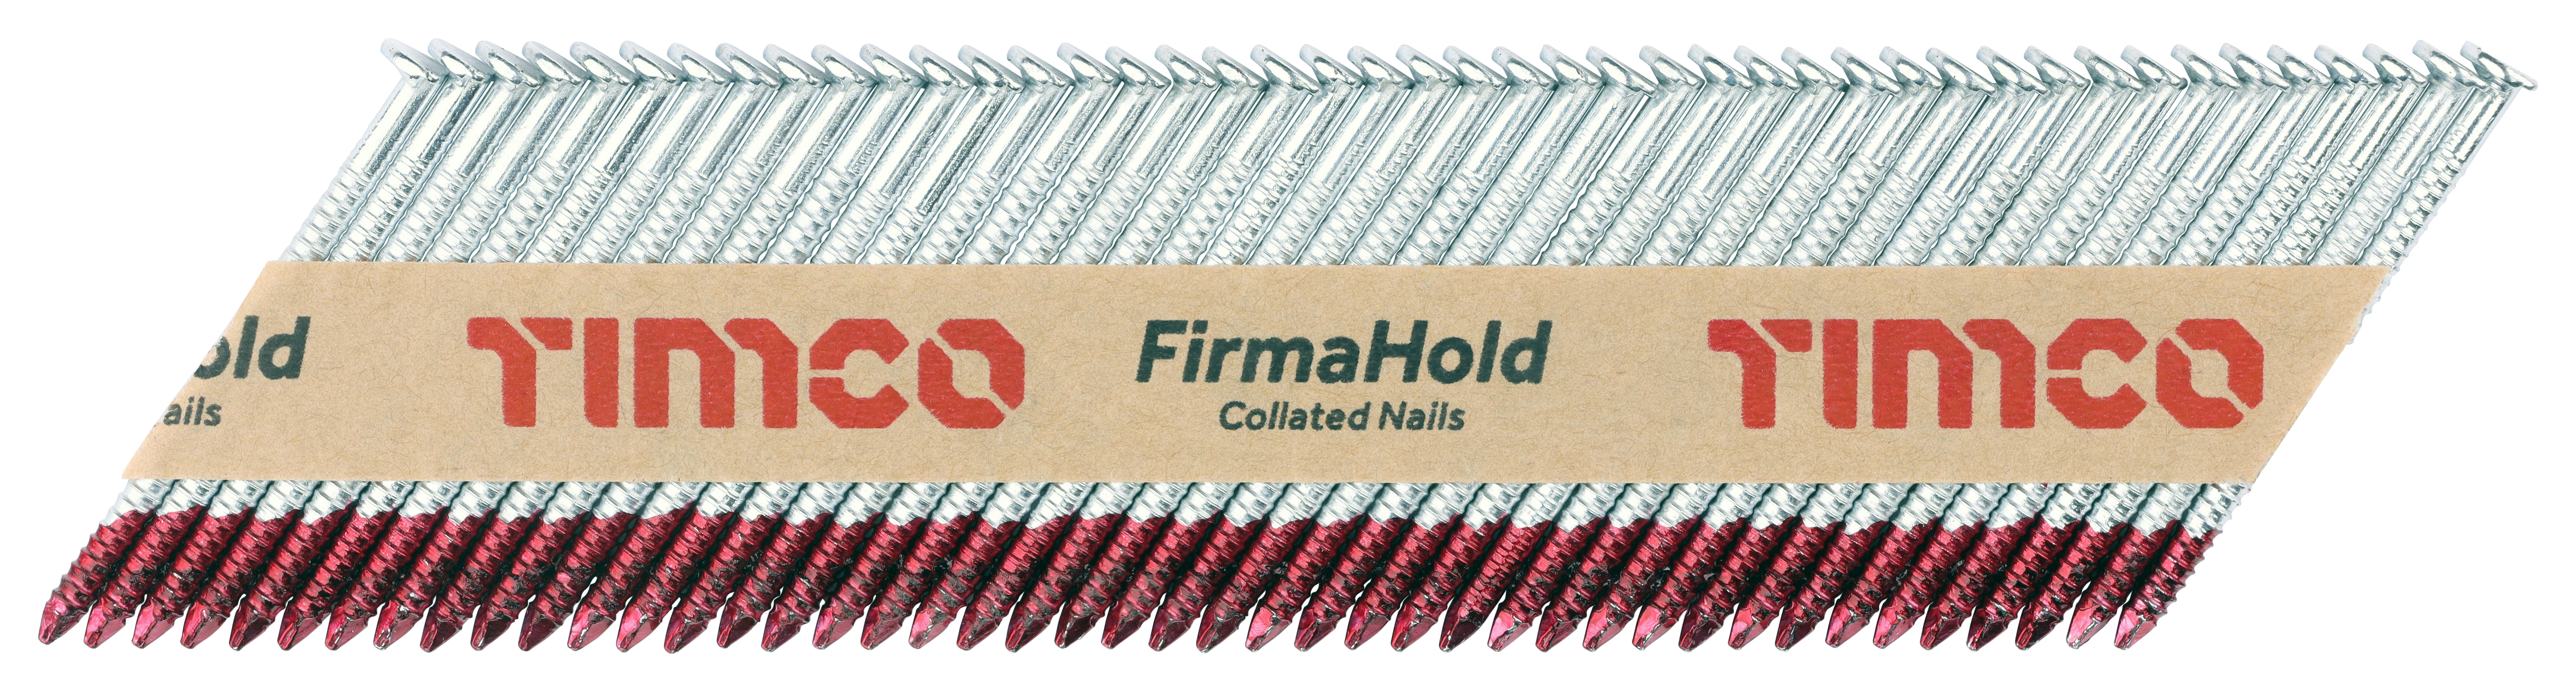 Collated Nails & Nailer Gas